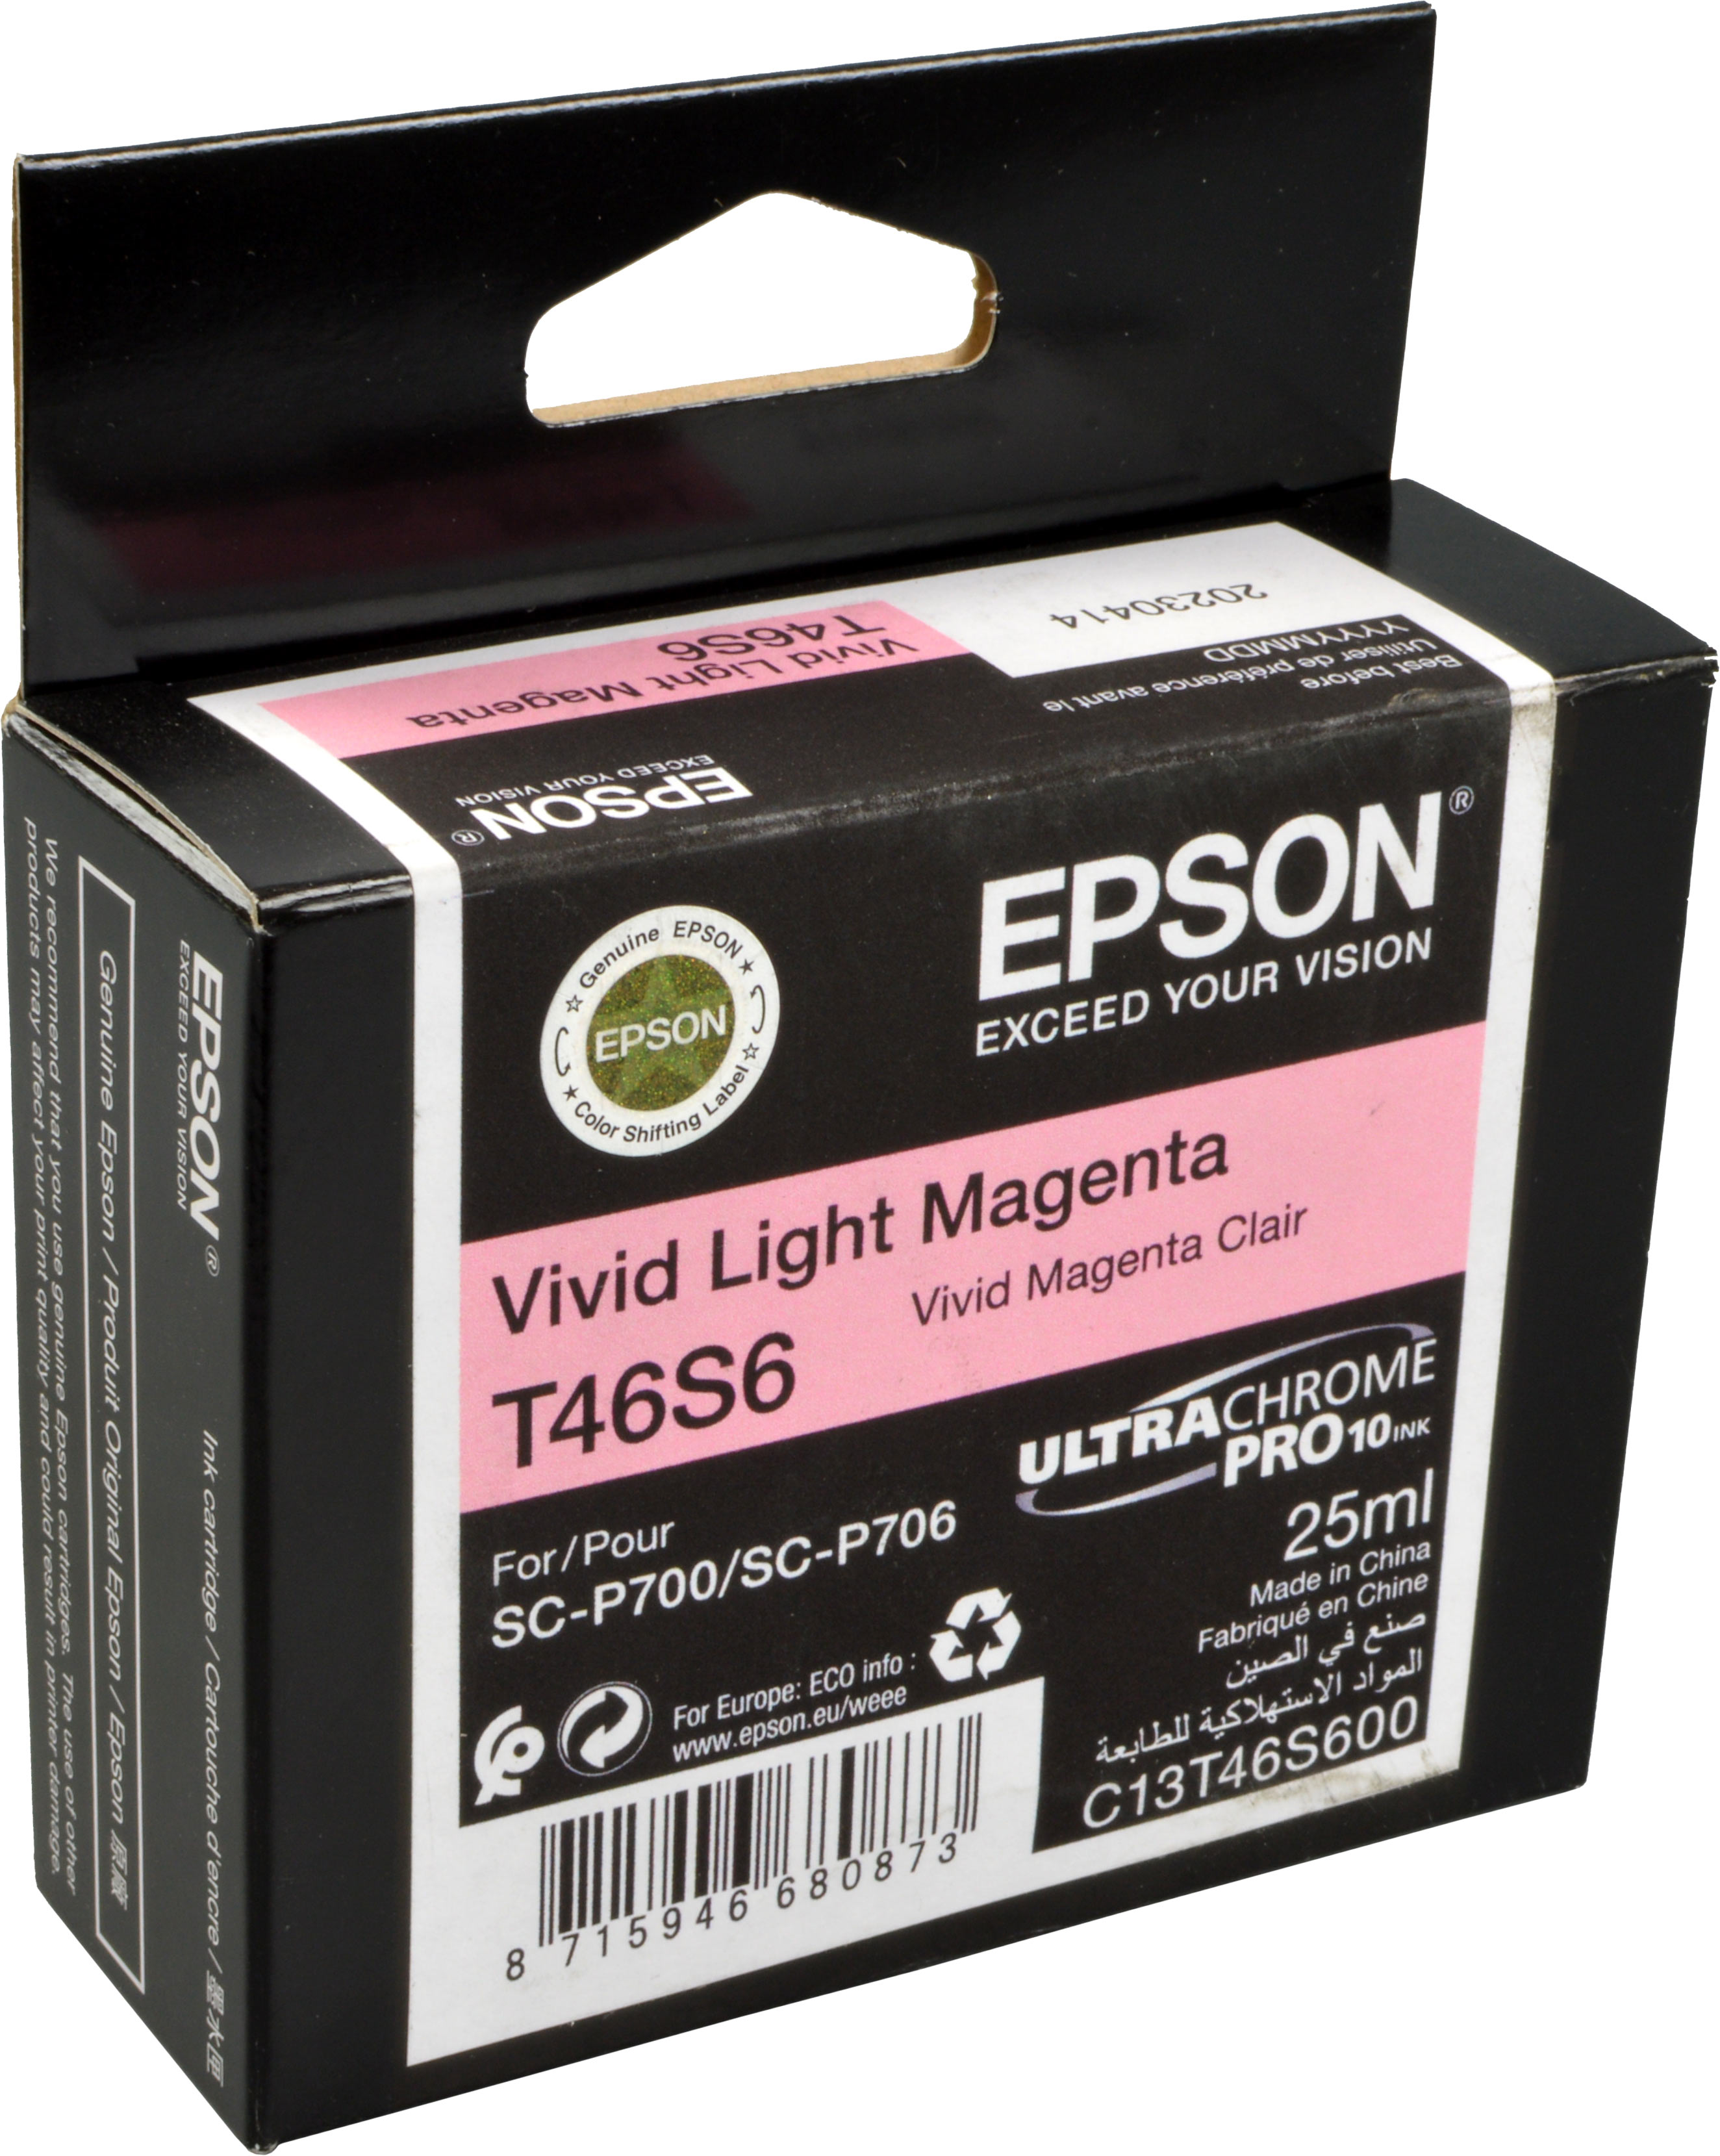 Epson Tinte C13T46S600  T46S6  vivid light magenta